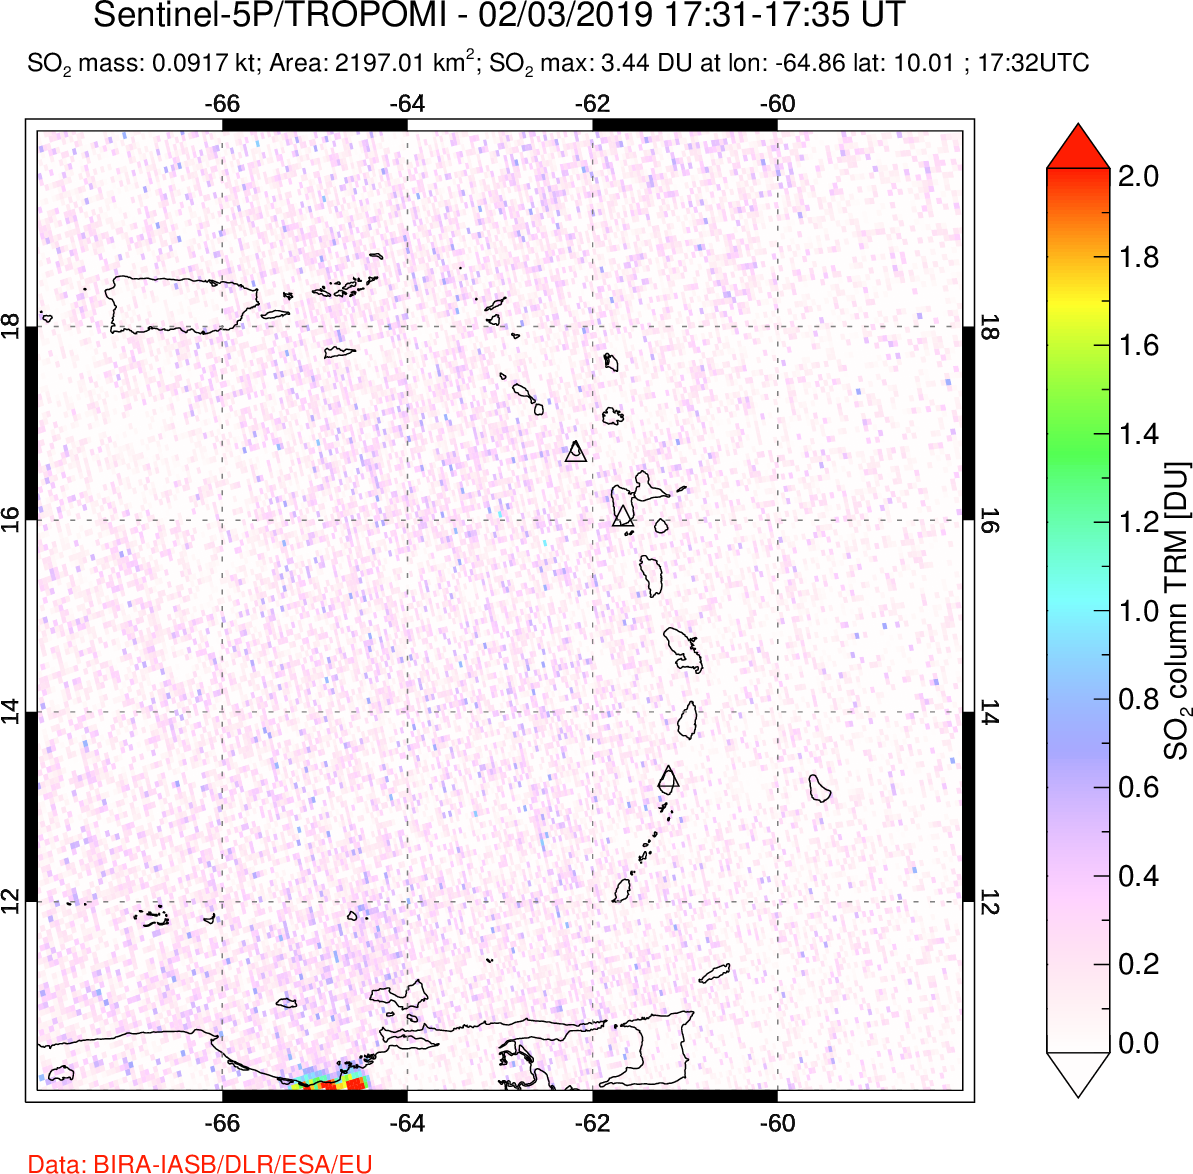 A sulfur dioxide image over Montserrat, West Indies on Feb 03, 2019.